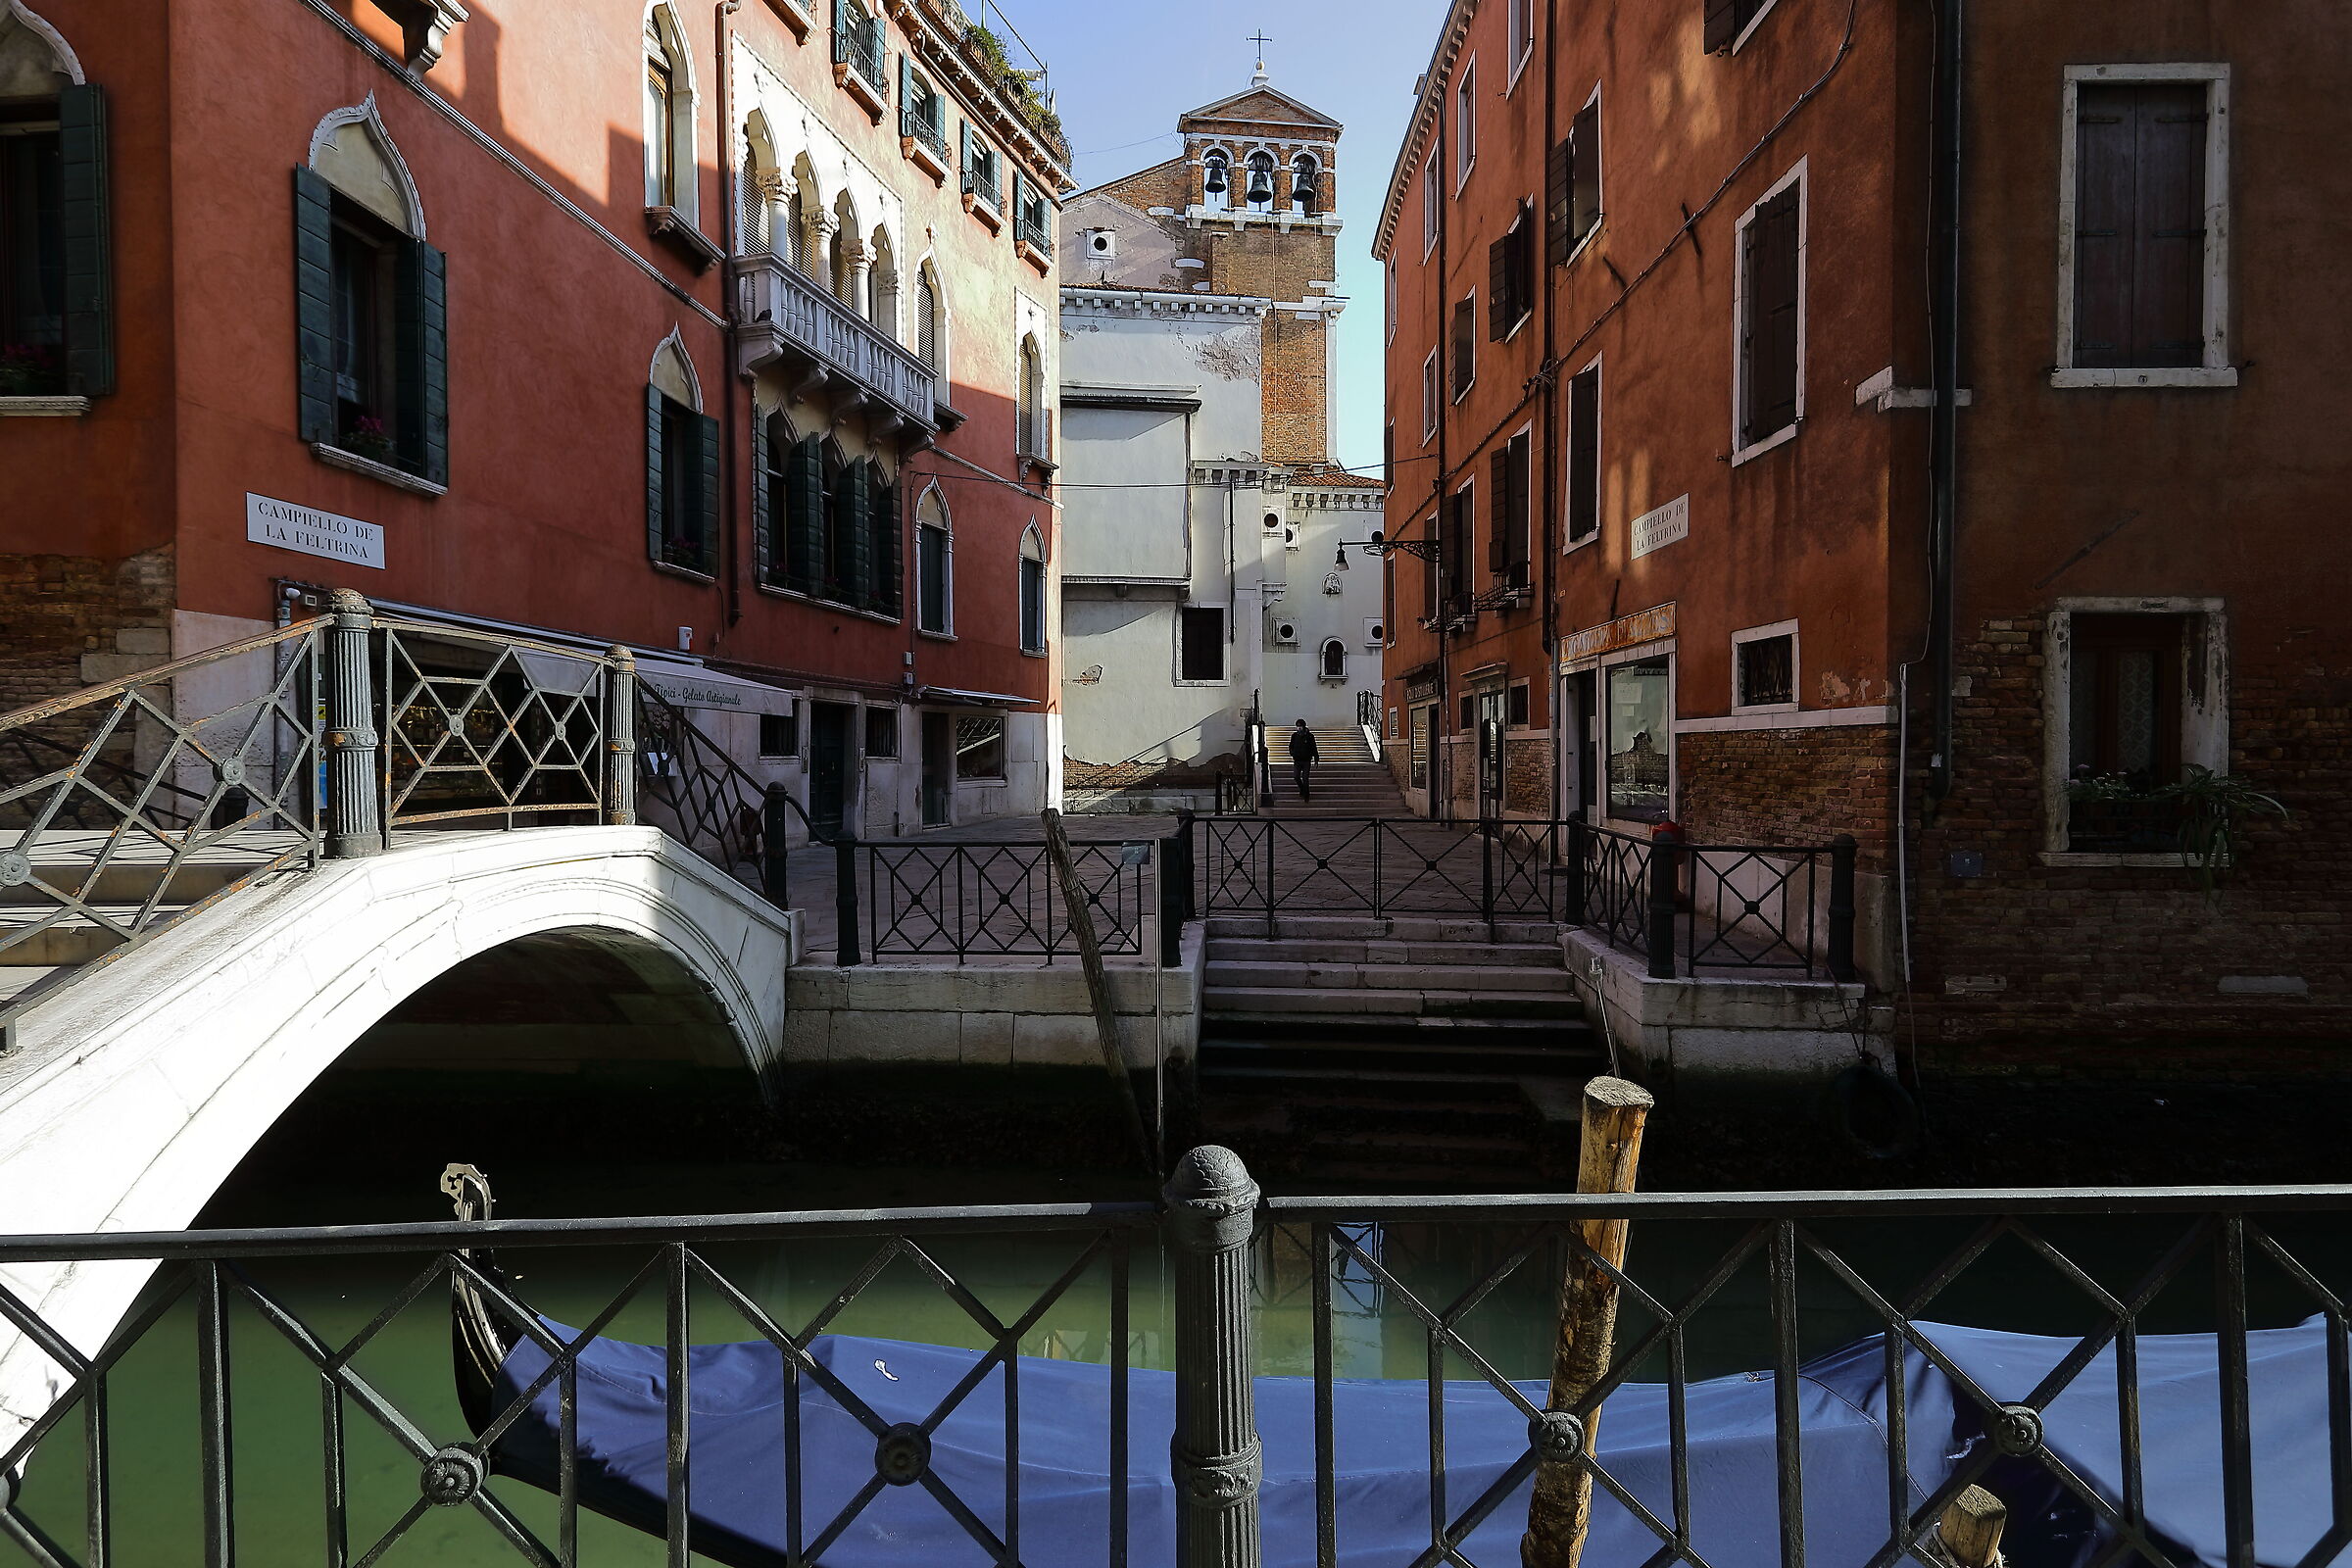 Venice glimpse...